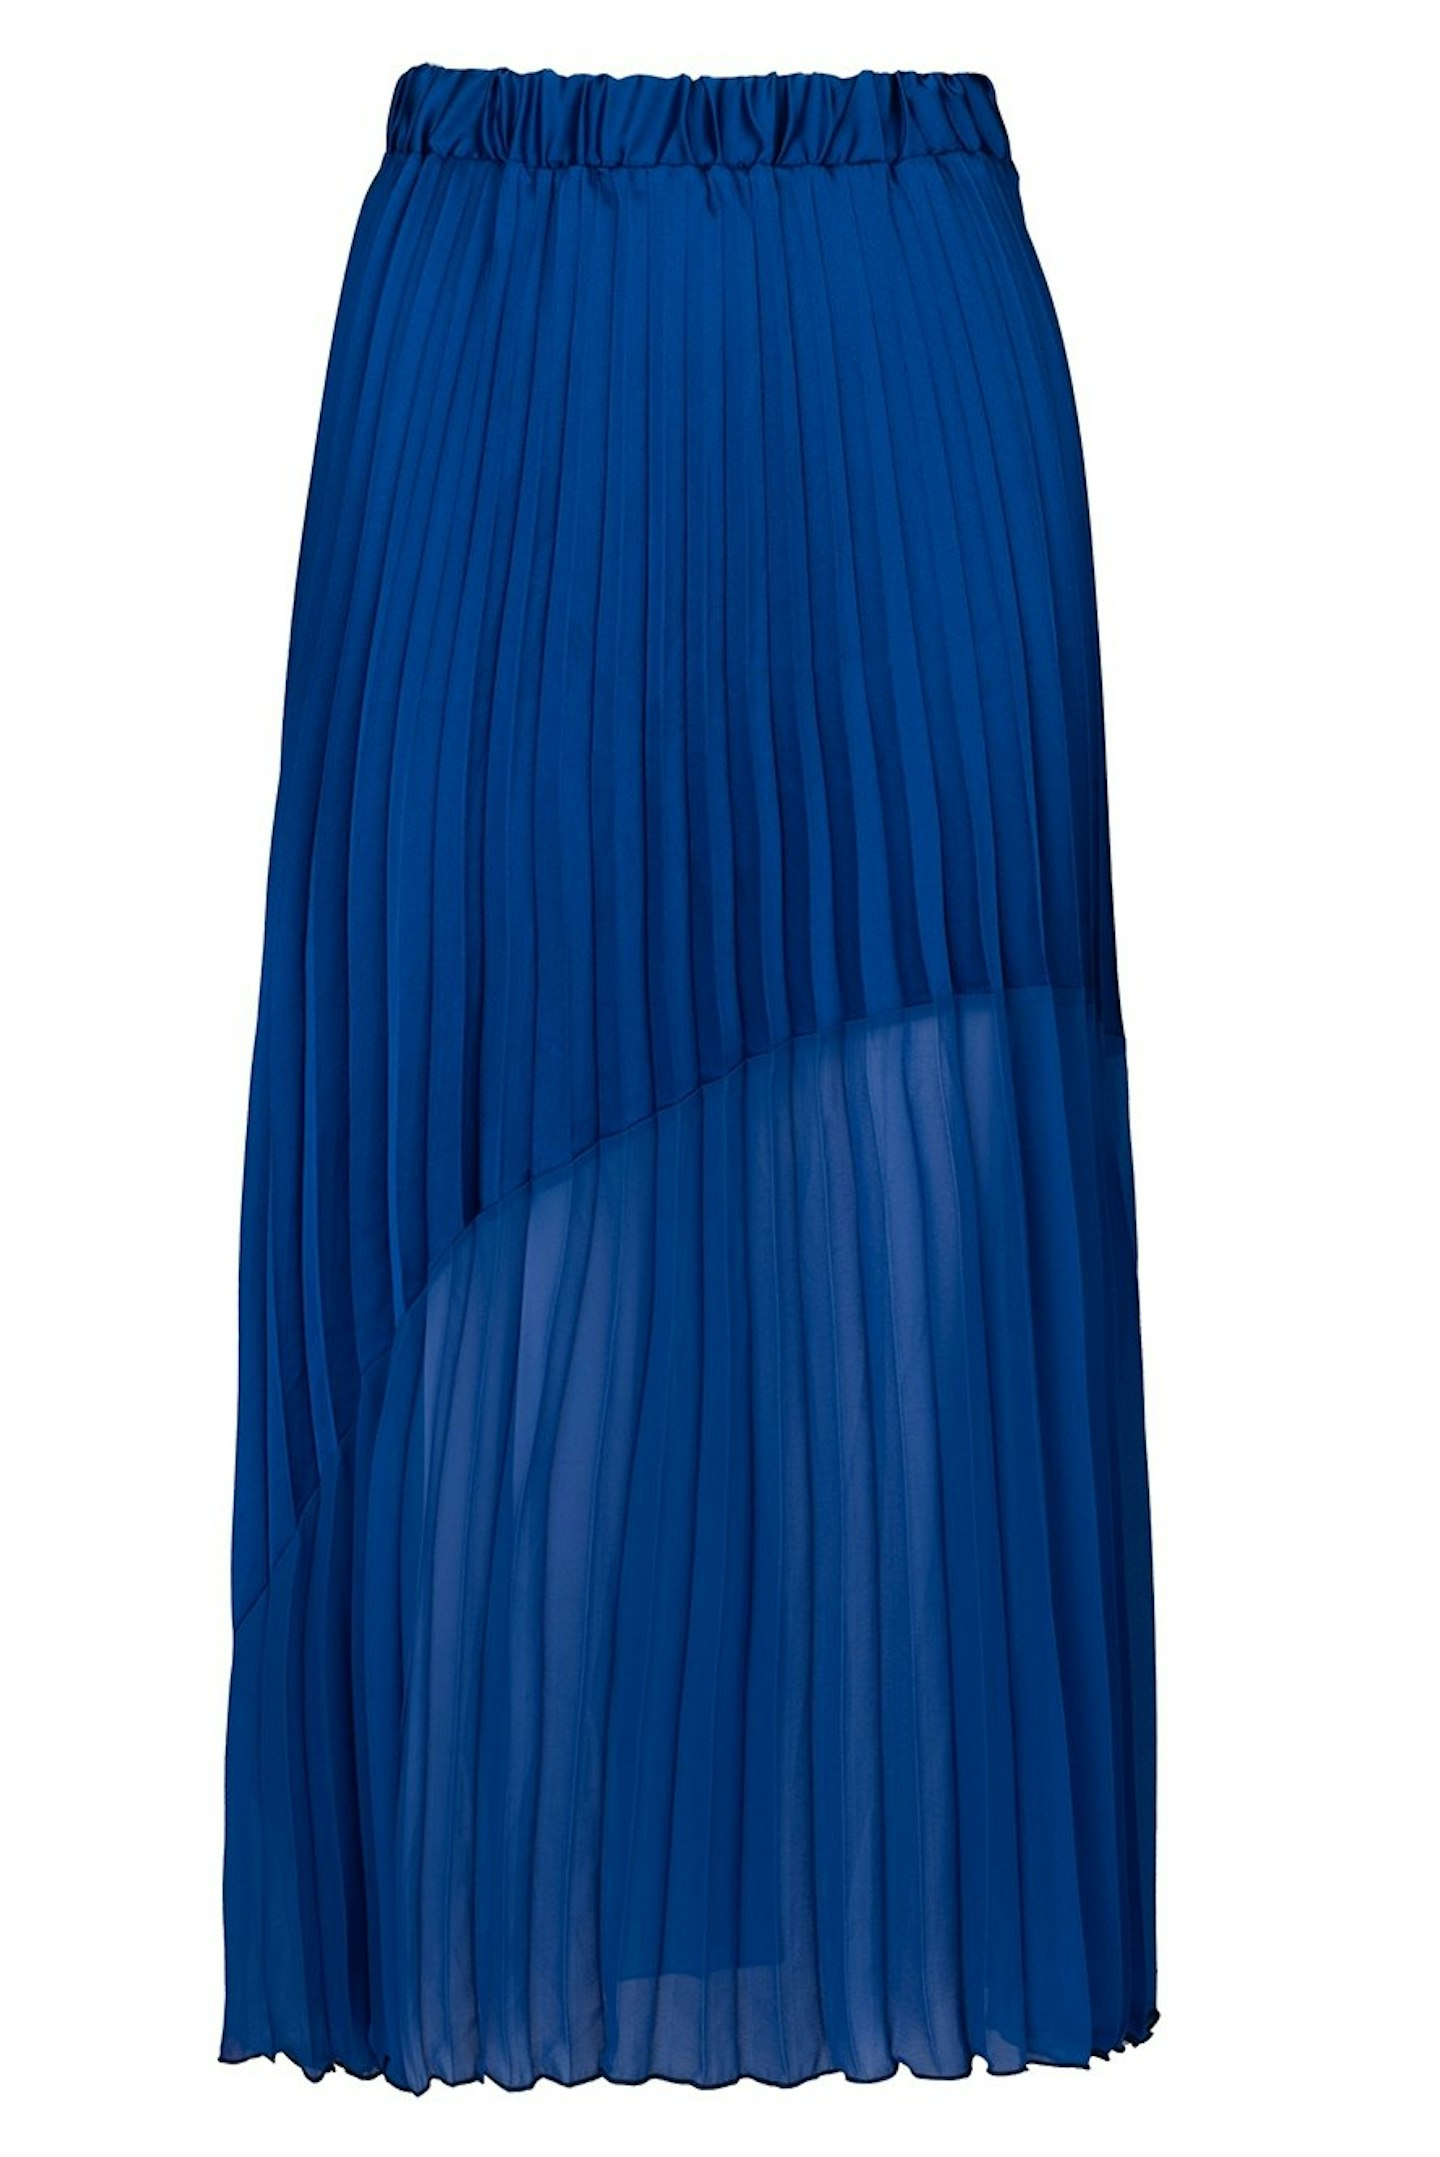 Hope, The Contrast Hem Pleated Skirt In Cobalt, £95